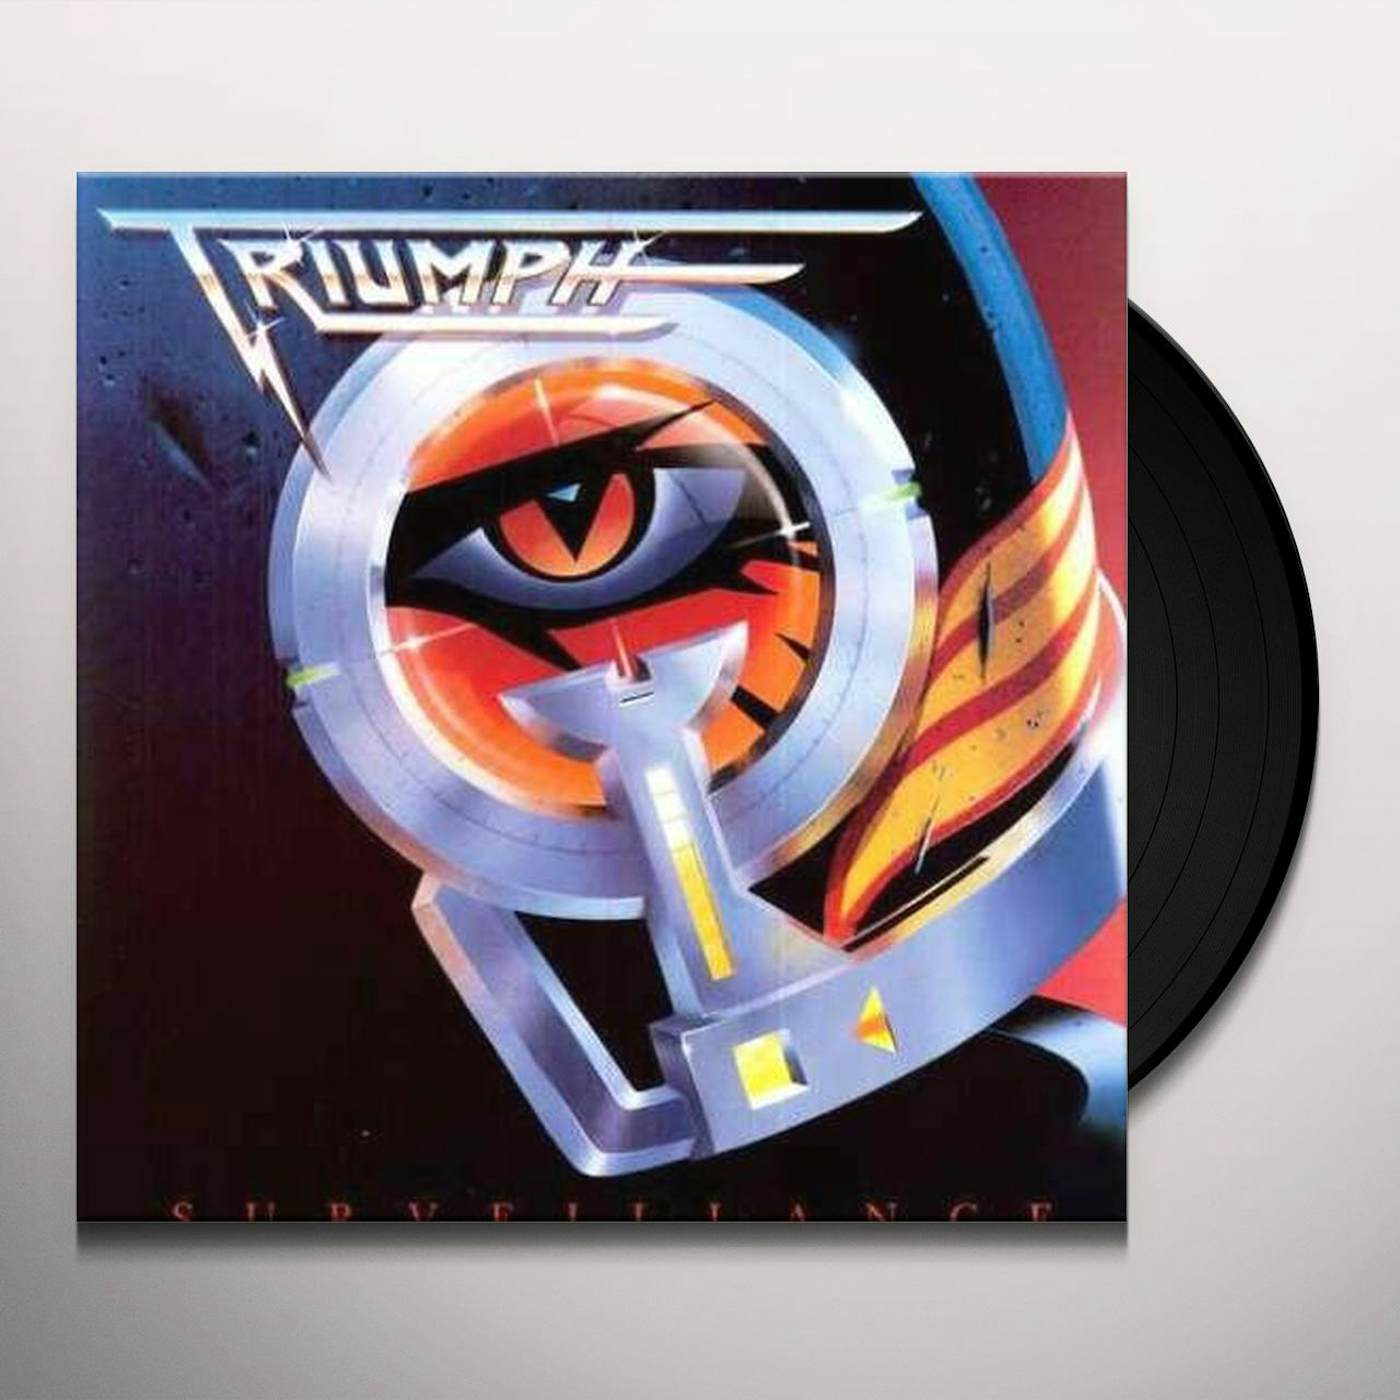 Triumph Surveillance Vinyl Record